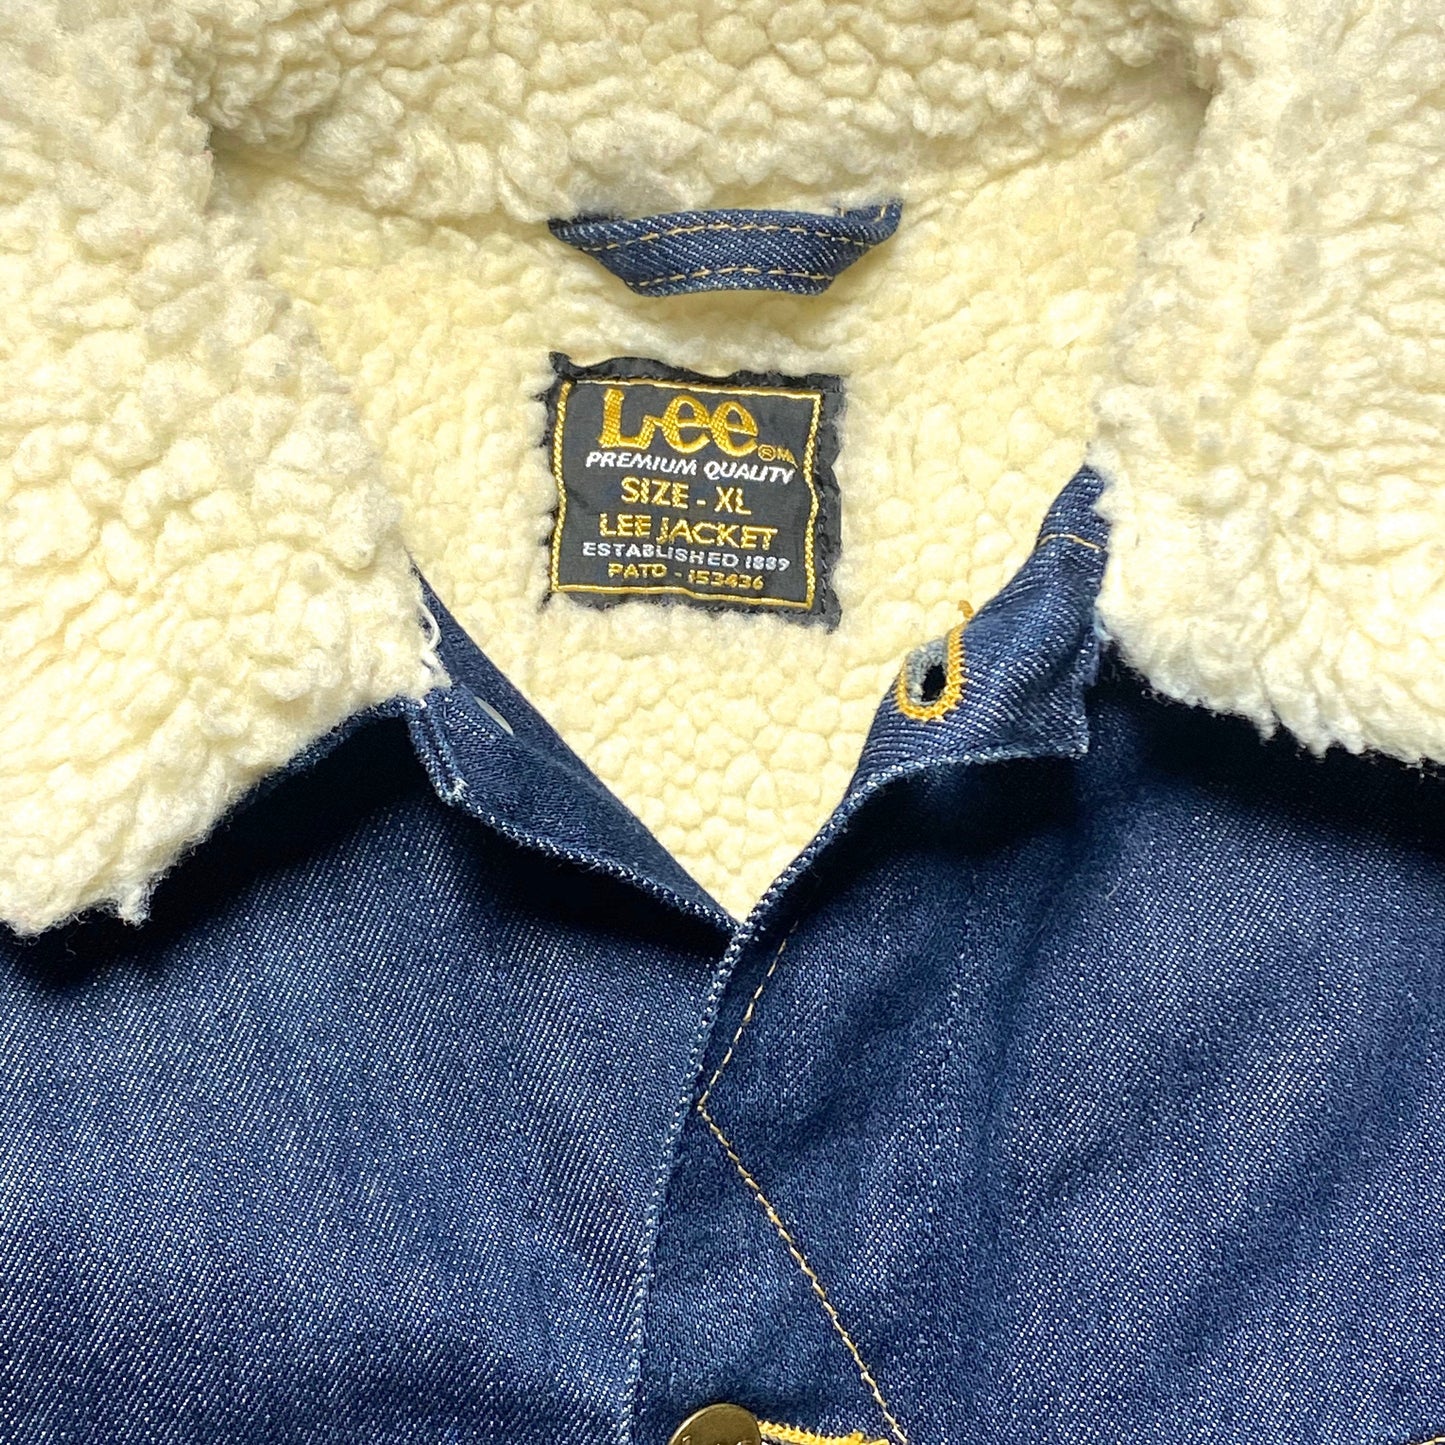 Lee Jeans denim Sherpa winter trucker jacket for ladies sz XL, mint condition